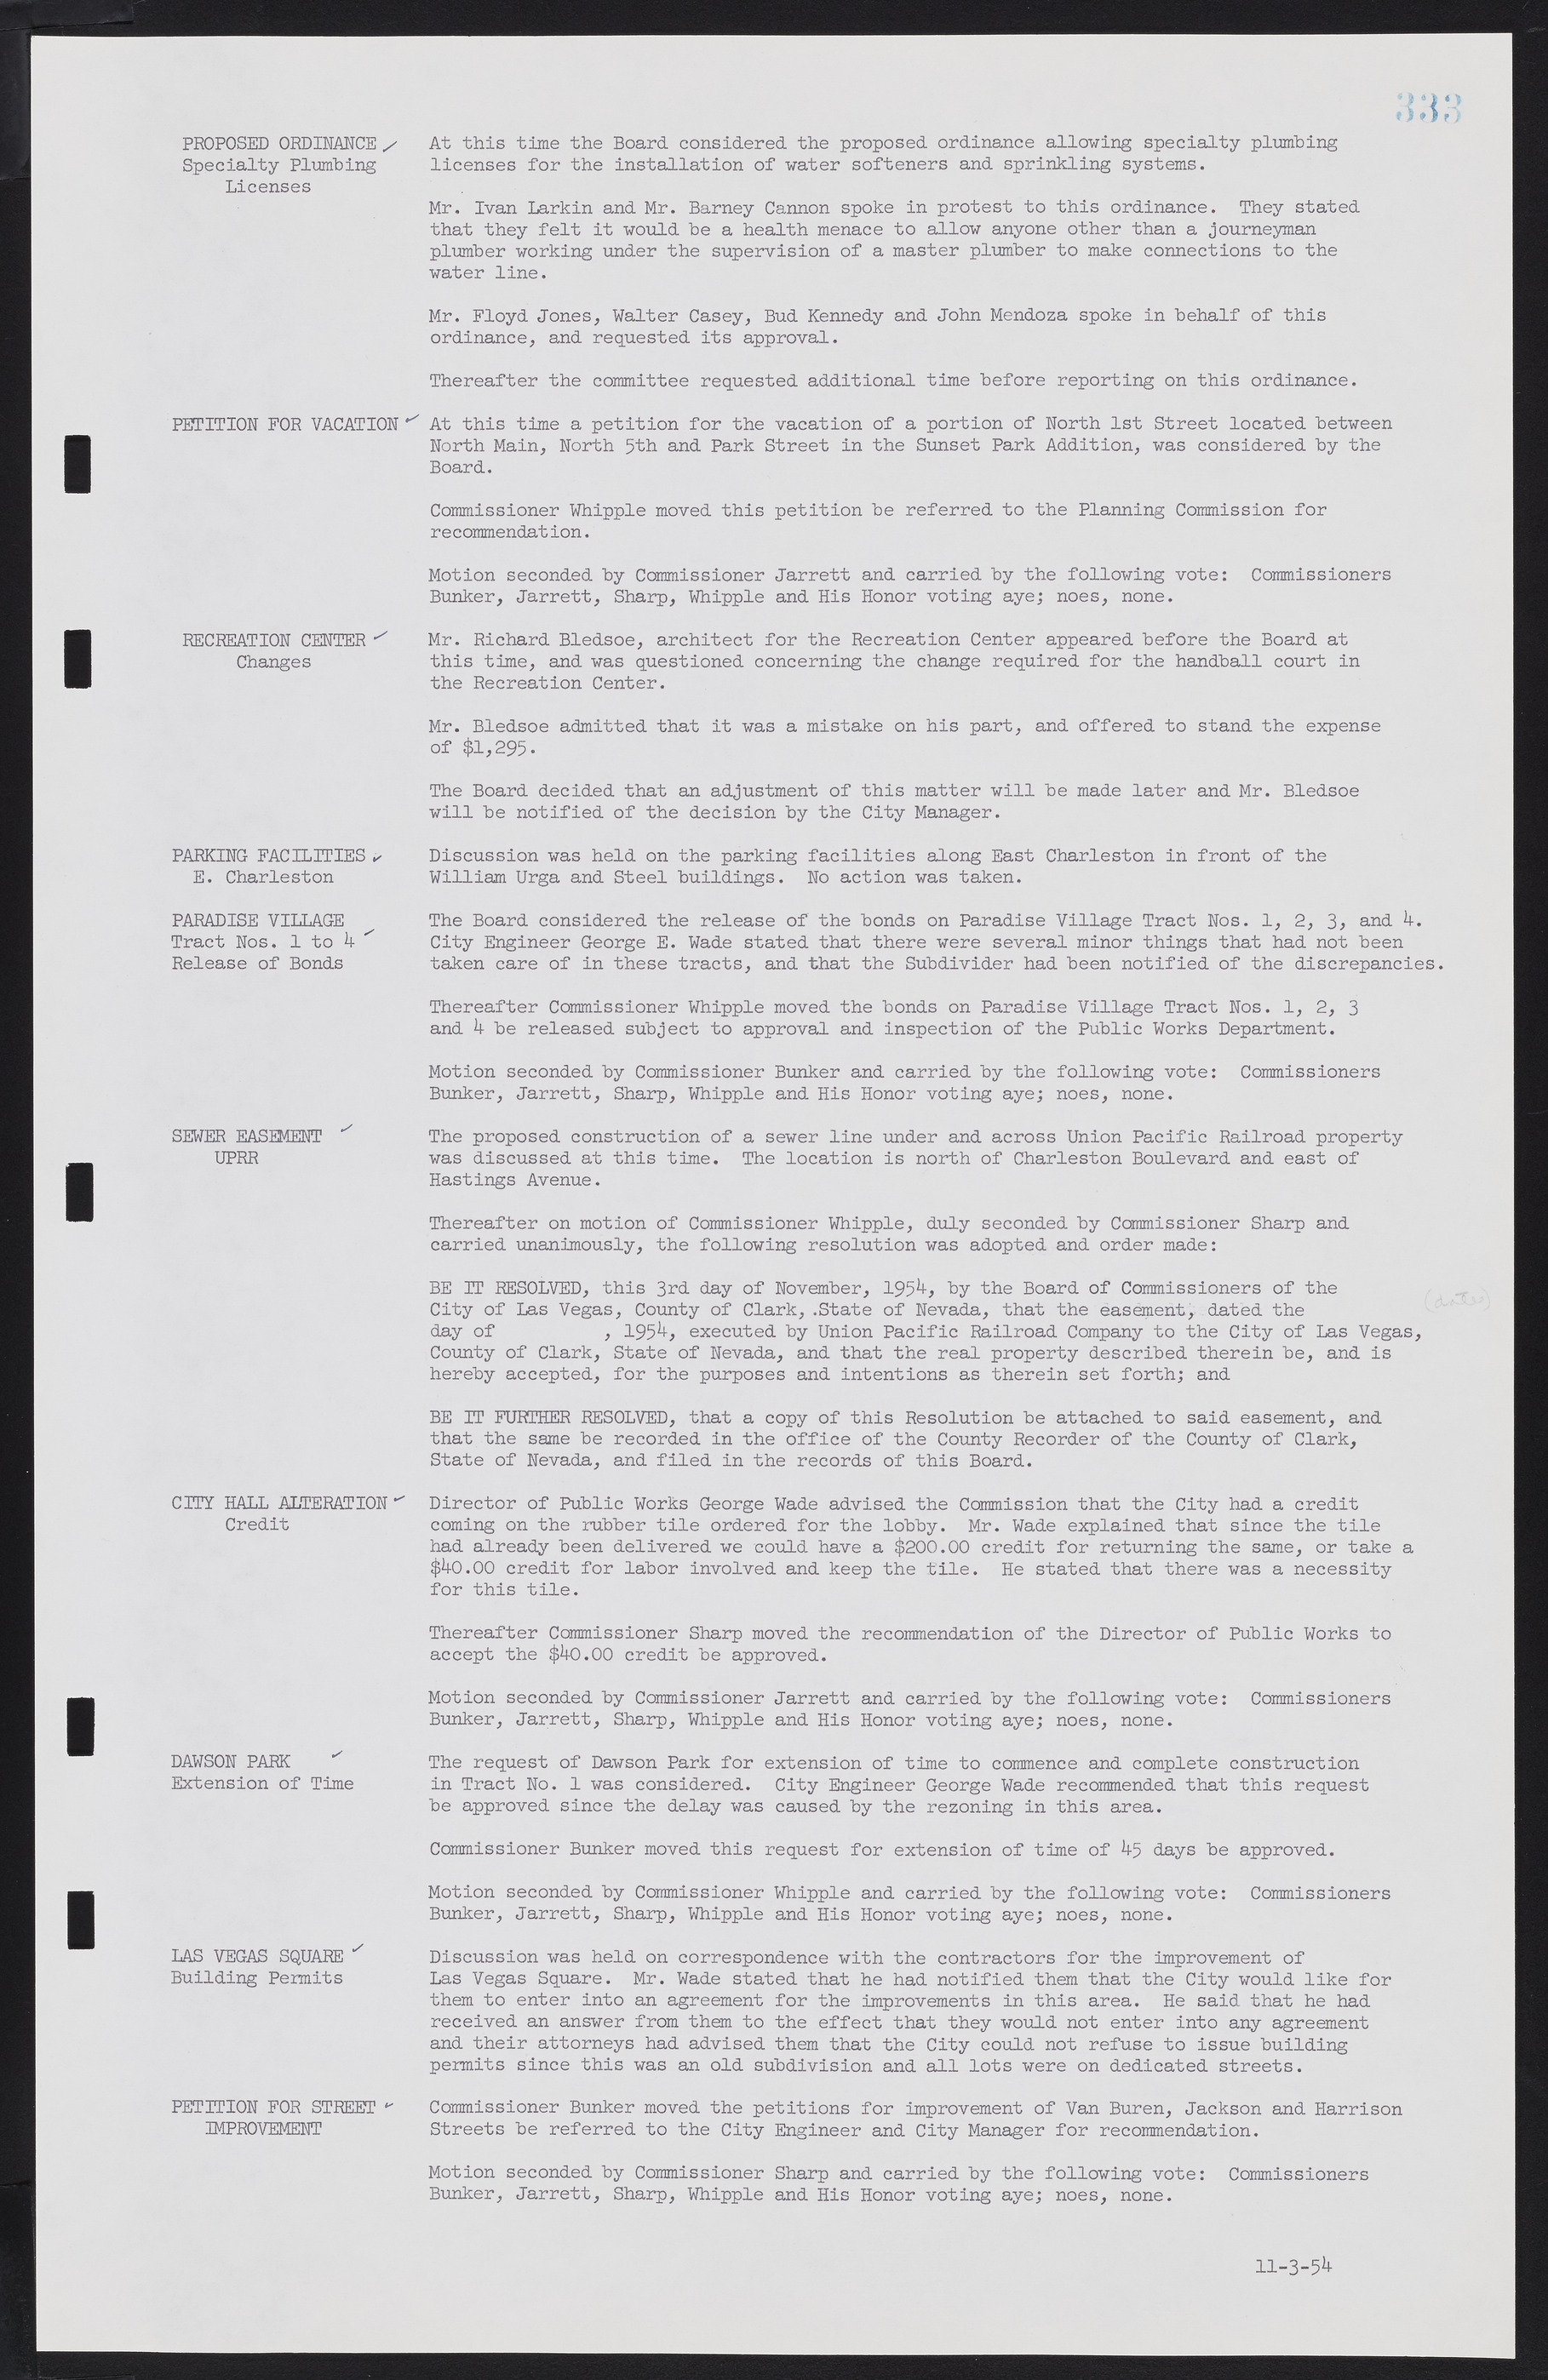 Las Vegas City Commission Minutes, February 17, 1954 to September 21, 1955, lvc000009-339